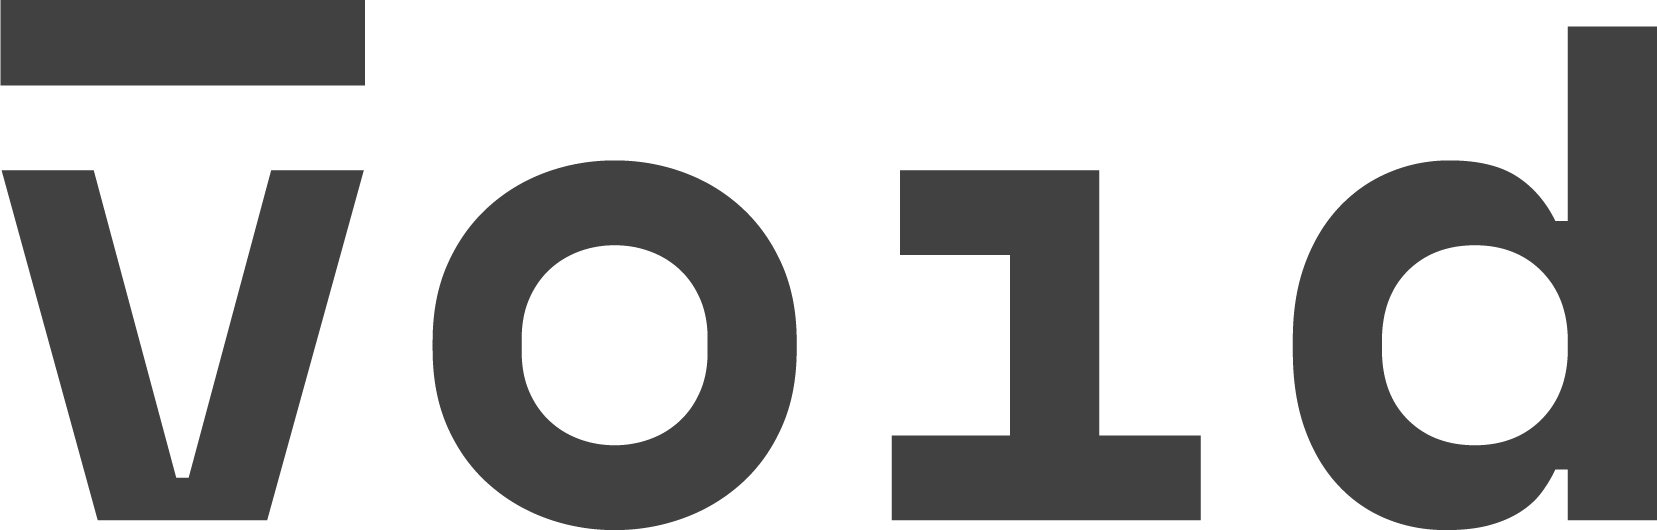 void SOC logo